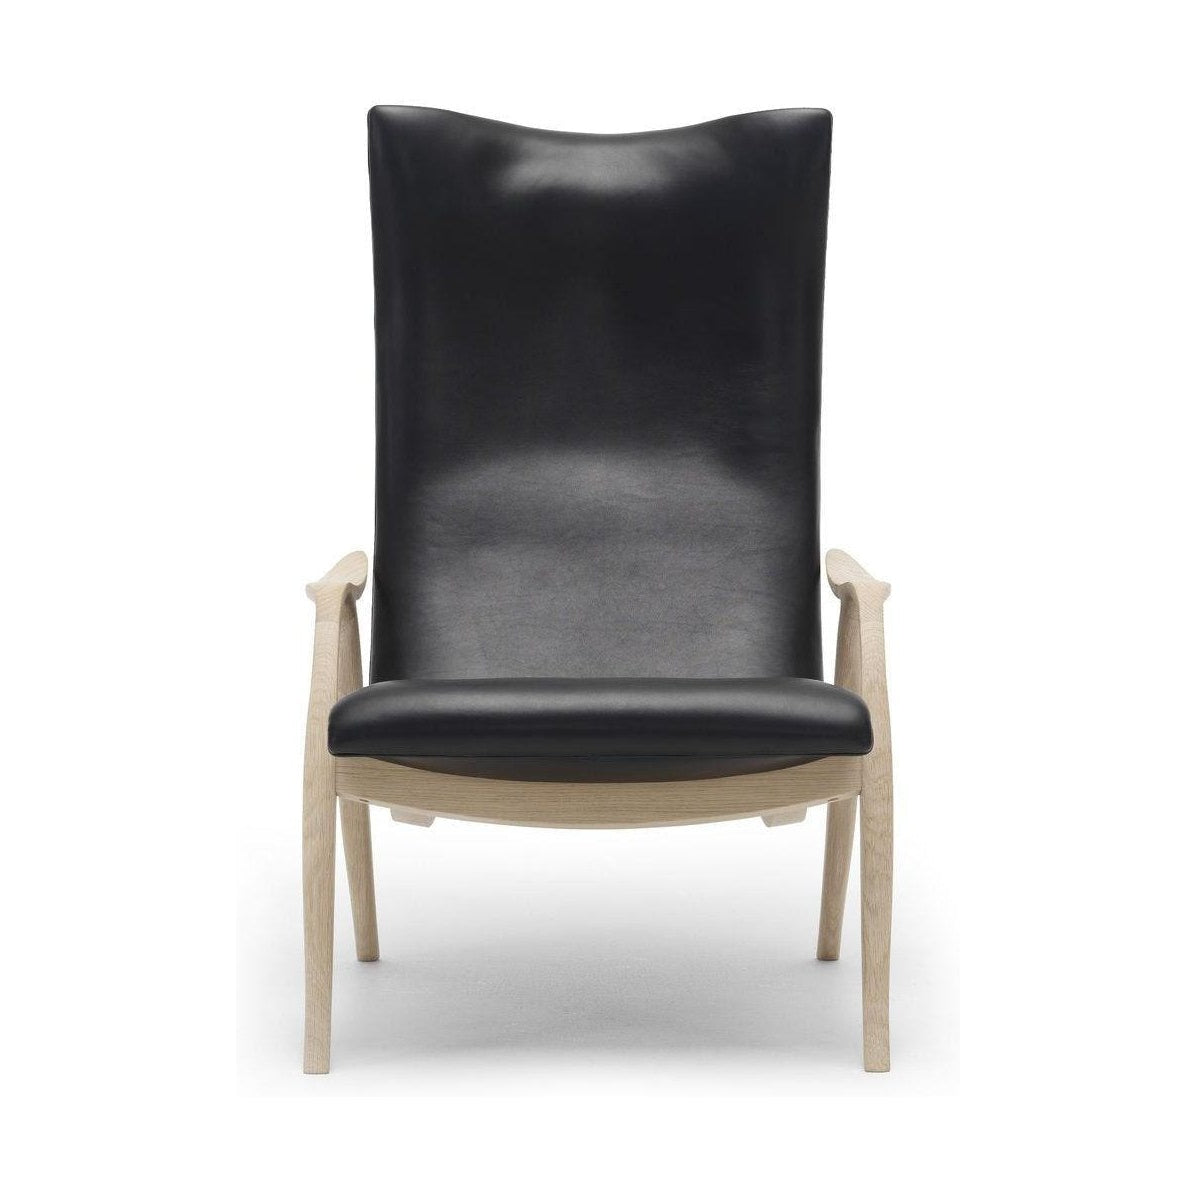 Carl Hansen Fh429 Signature Chair, Oiled Oak/Black Leather